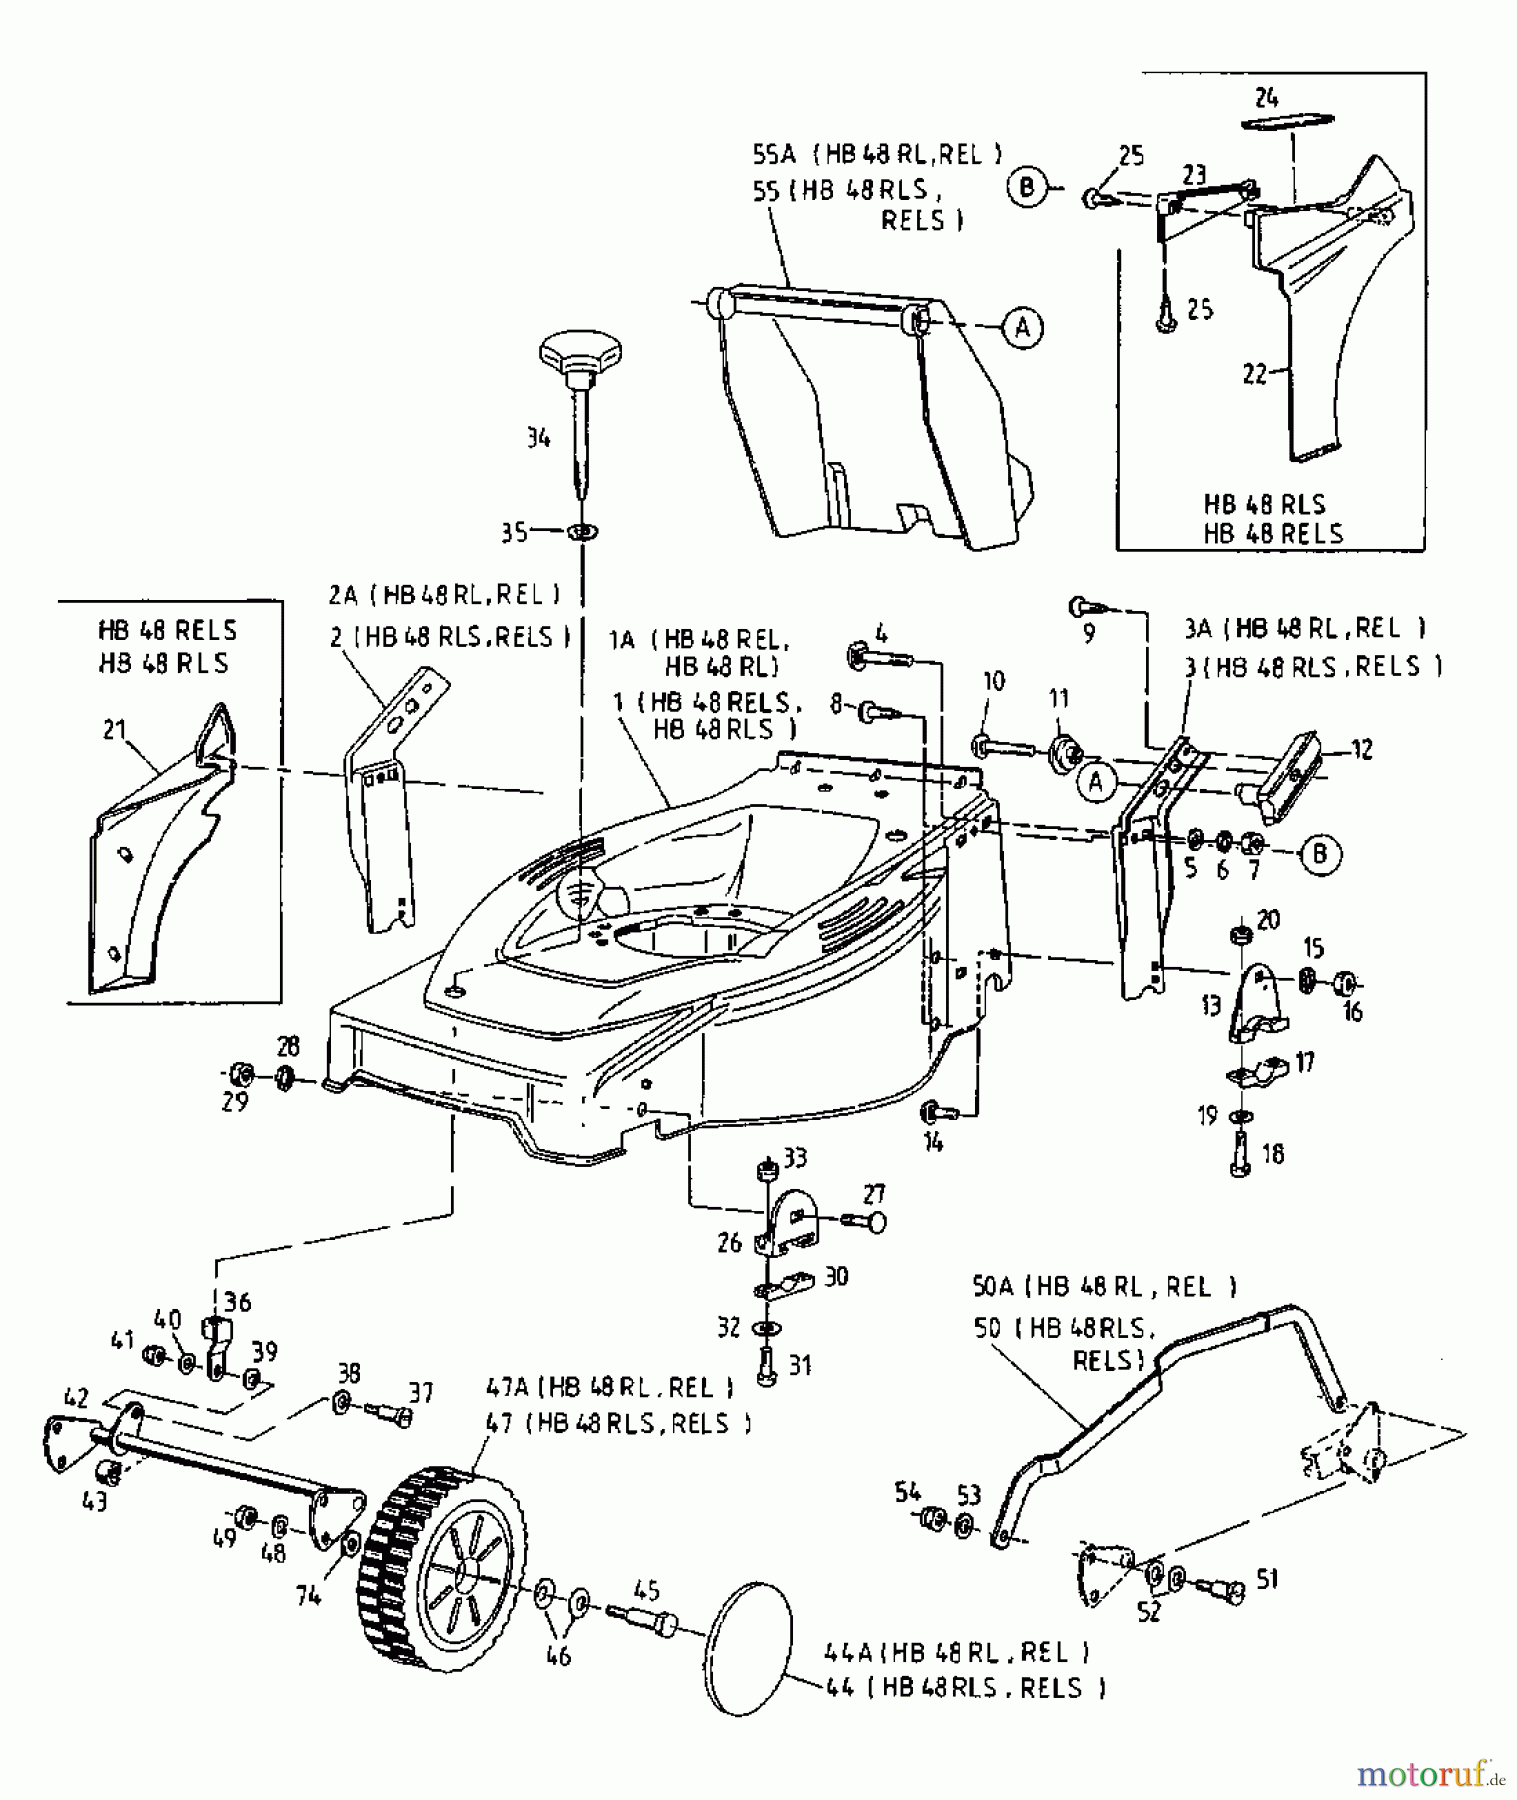  Gutbrod Motormäher mit Antrieb HB 48 RL 12C-T58V604  (2000) Grundgerät